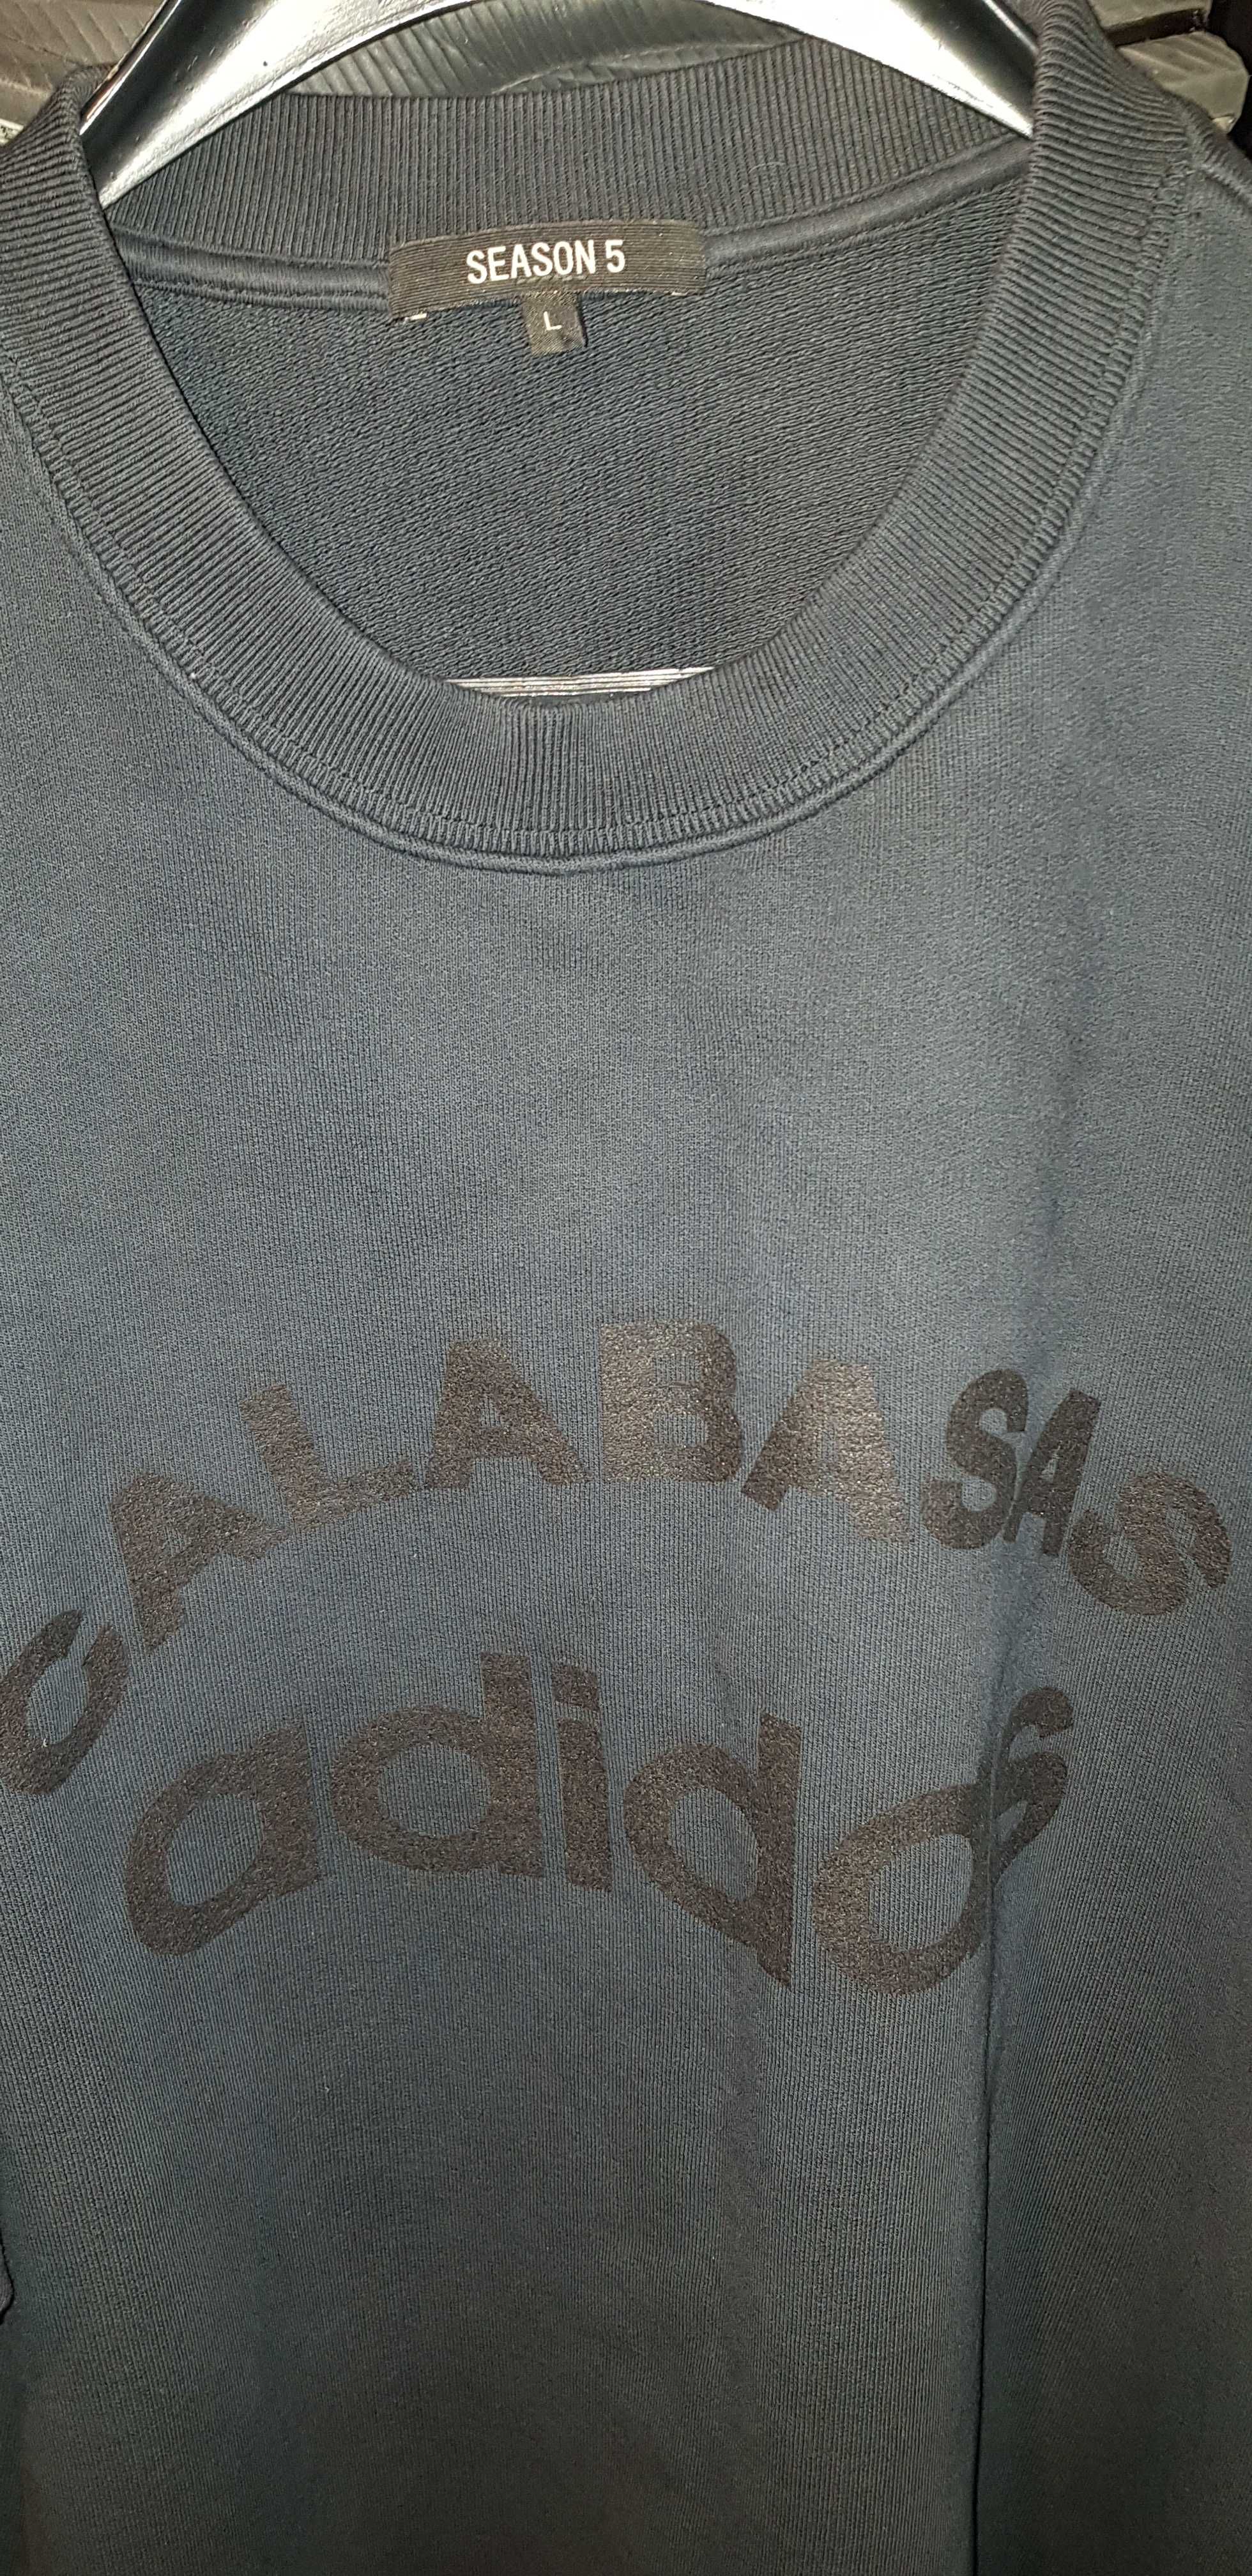 bluza adidas Yeezy Calabasas Season 5